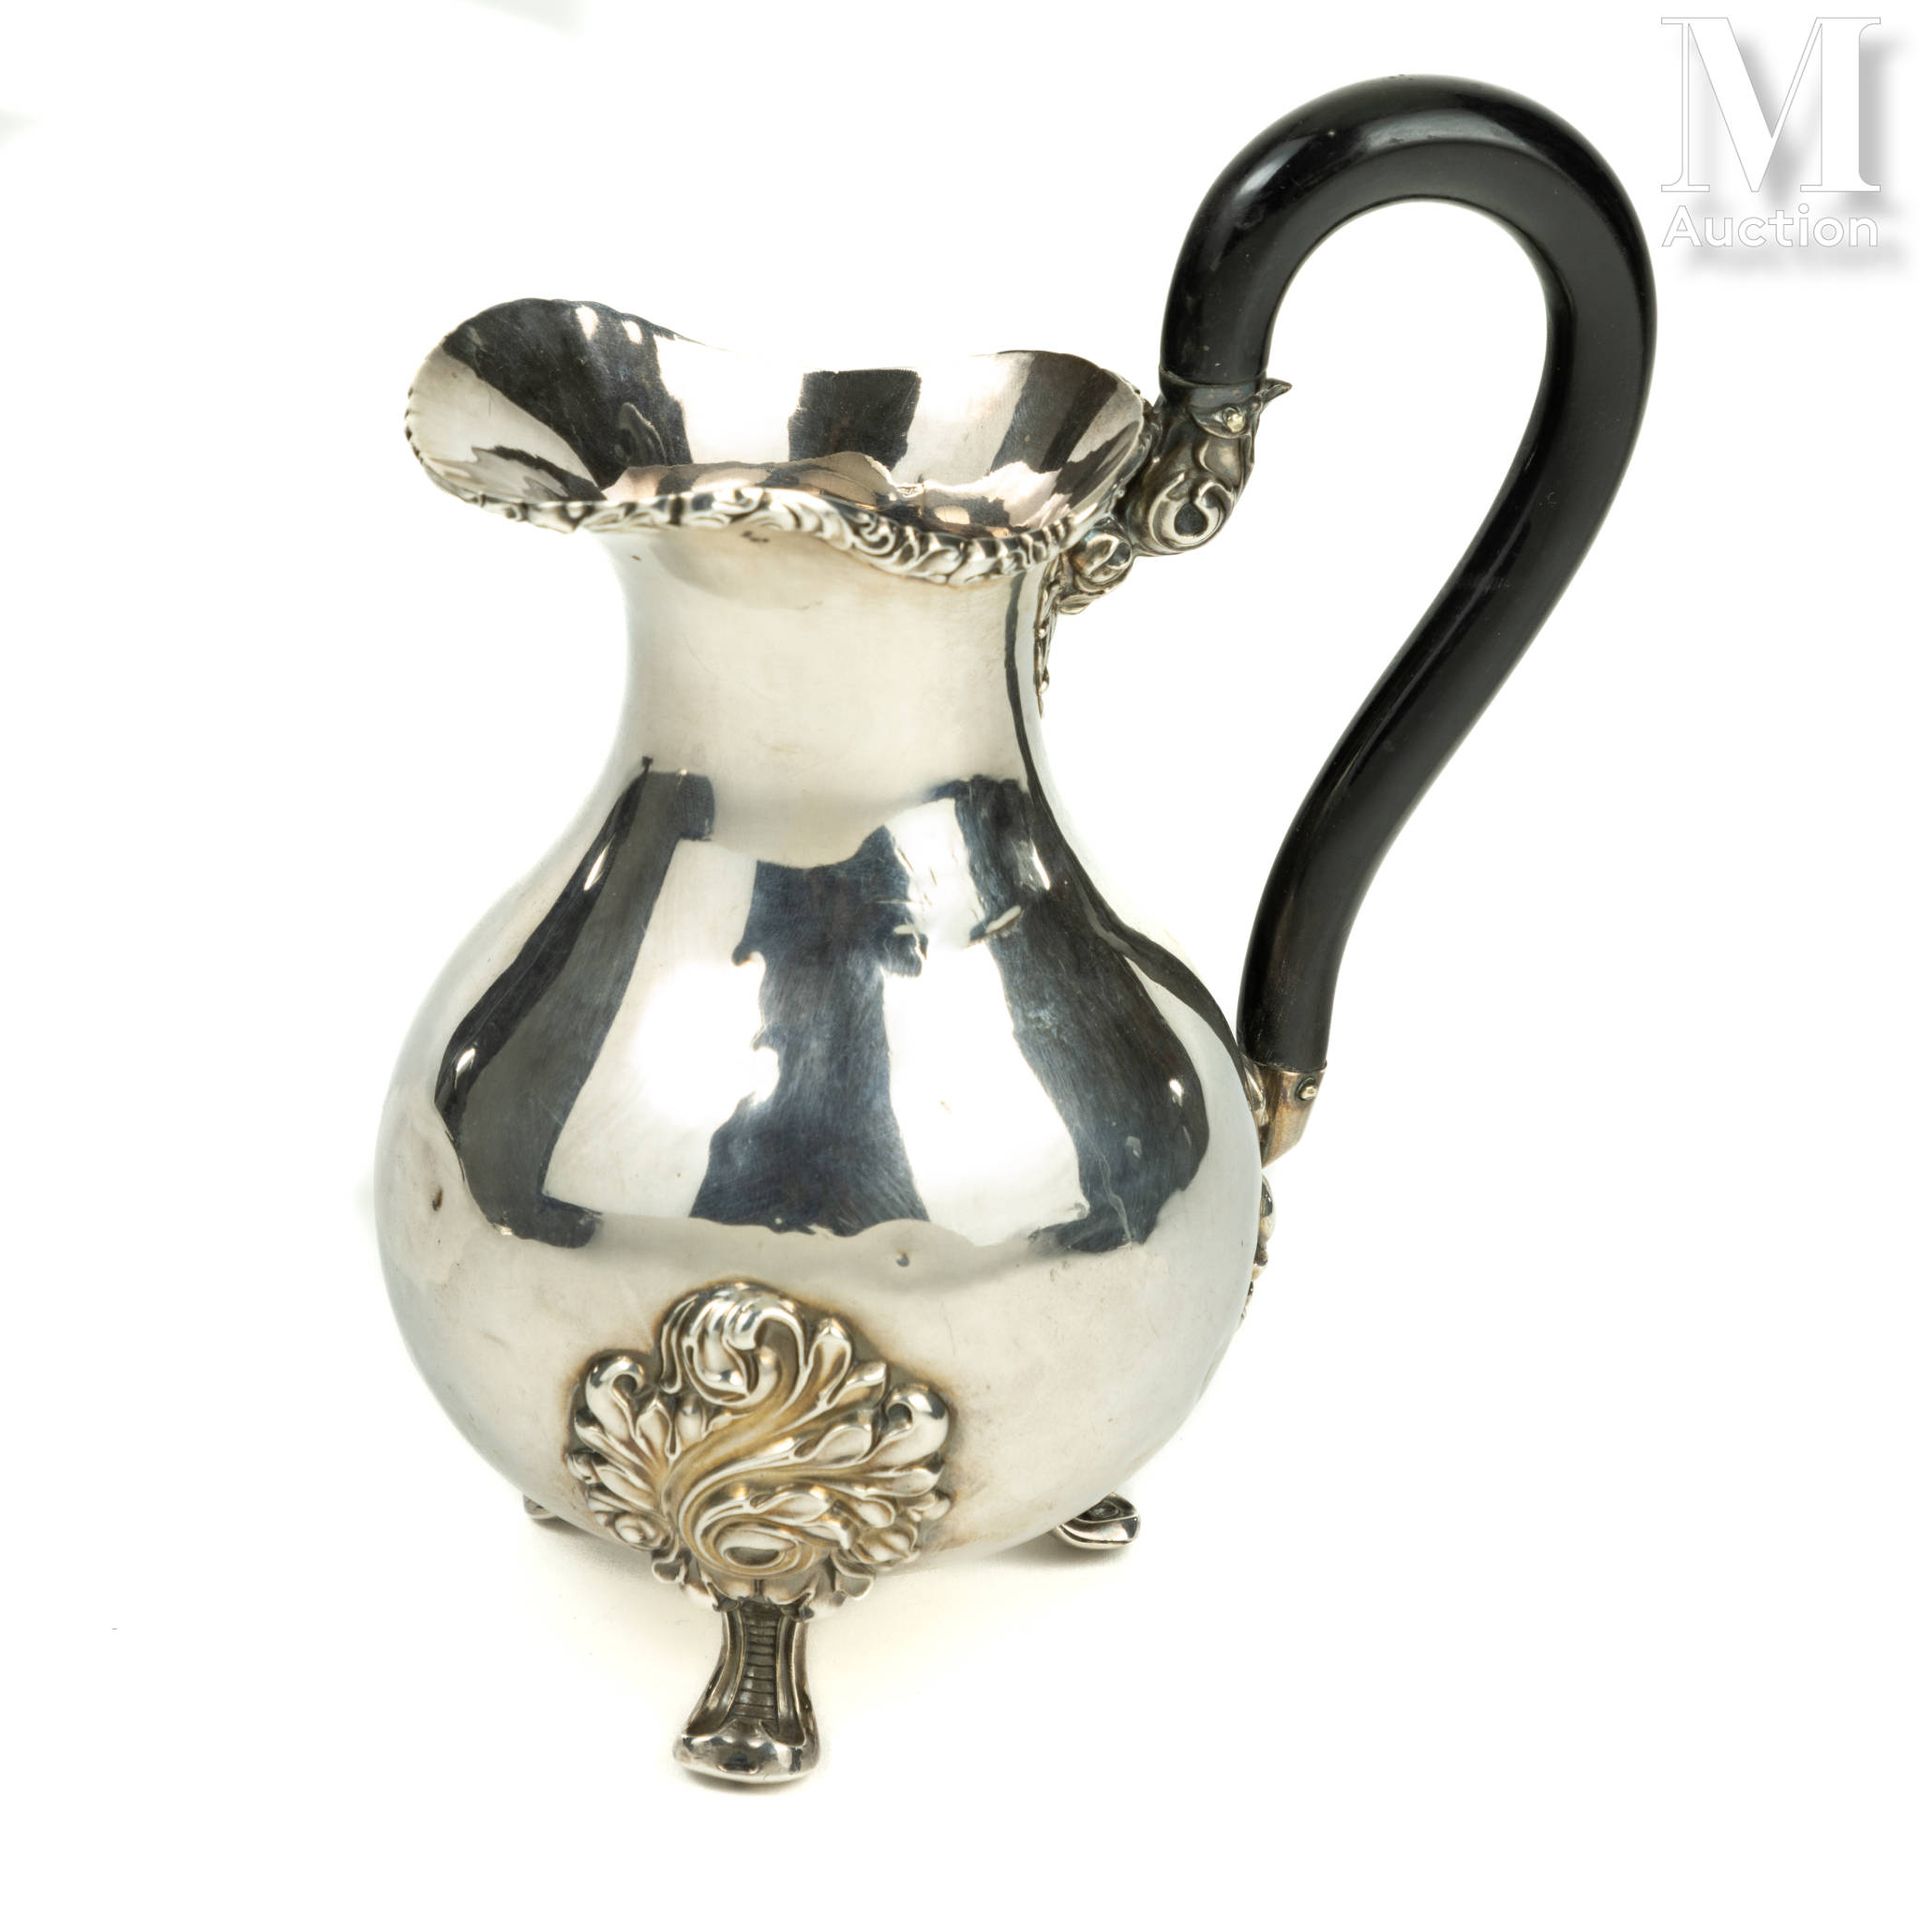 Verseuse en argent uni 一个普通的银质咖啡壶，由三个带卷轴装饰的脚支撑。唇部装饰有卷轴。 
熏黑的木质手柄。
米纳瓦标记。
H.17 - &hellip;